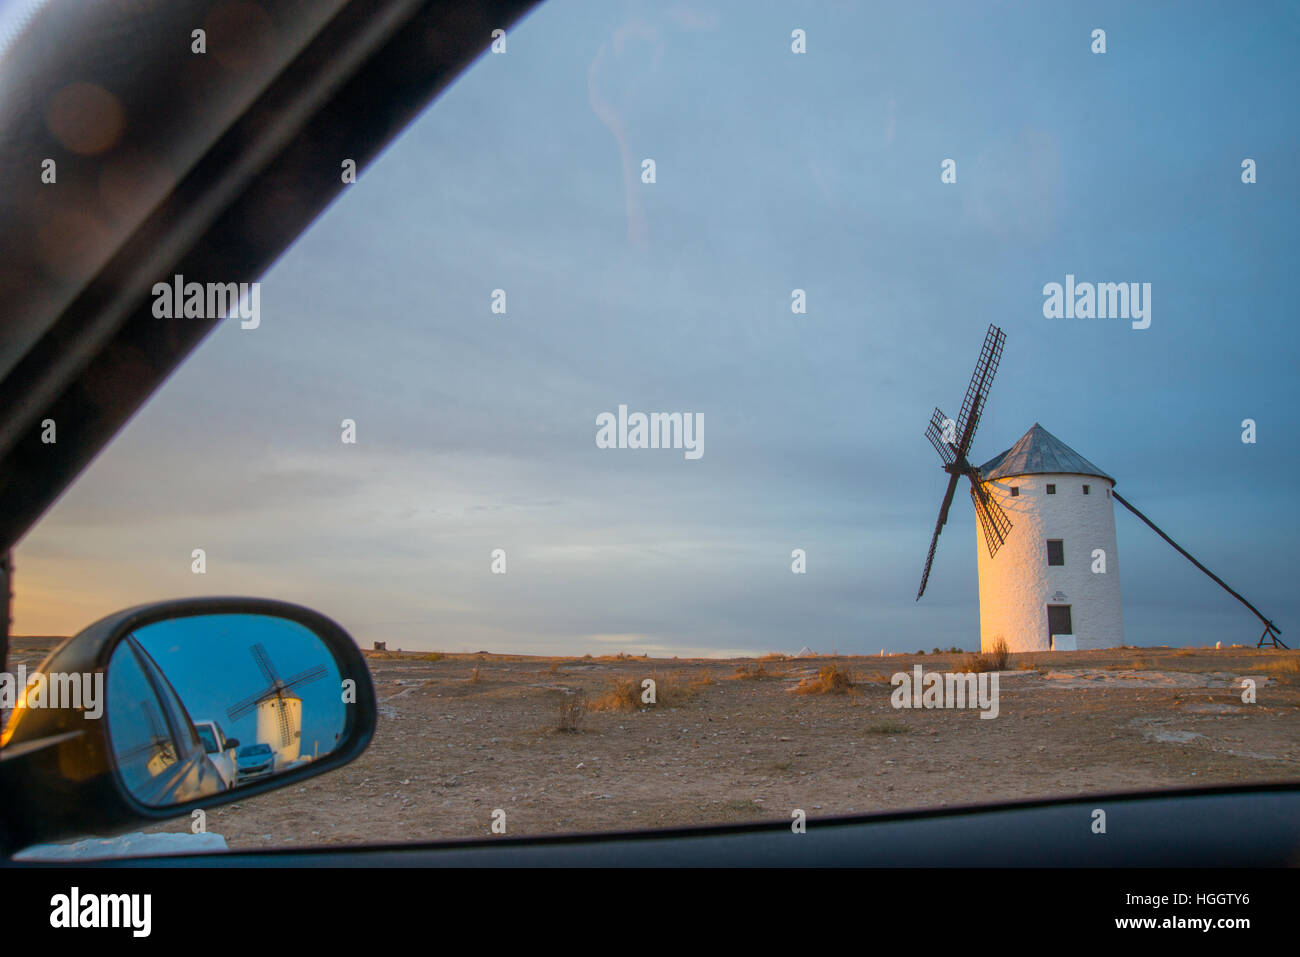 Windmill and reflection in the rear view mirror of a car. Campo de Criptana, Ciudad Real province, Castilla La Mancha, Spain. Stock Photo